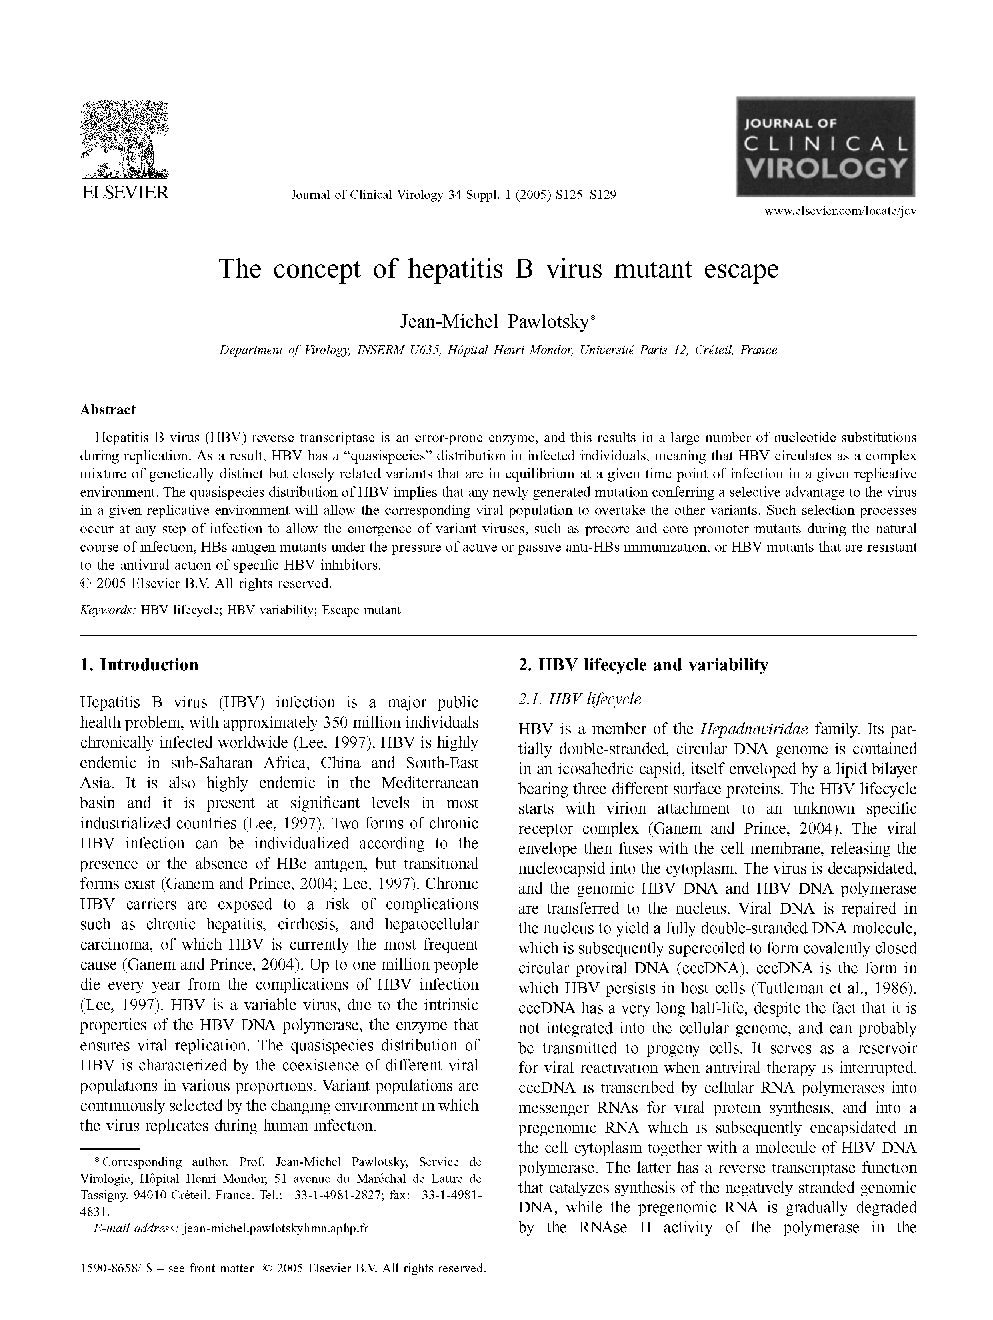 The concept of hepatitis B virus mutant escape